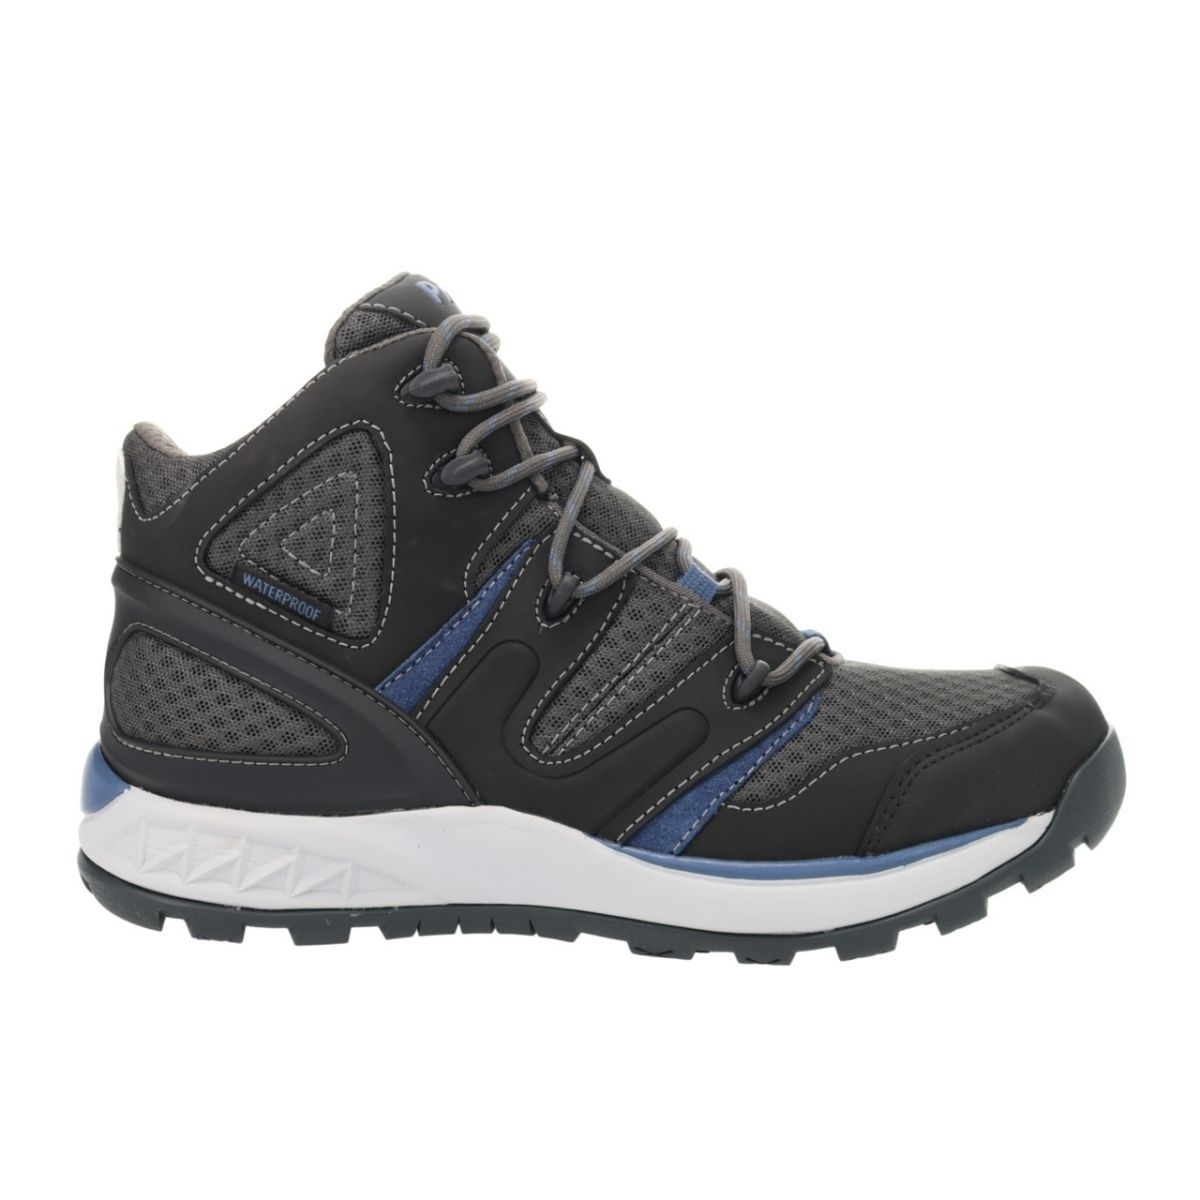 Propet Men's Veymont Waterproof Hiking Boot Grey/Blue - MOA022SGRB GREY/BLUE - GREY/BLUE, 9 X-Wide